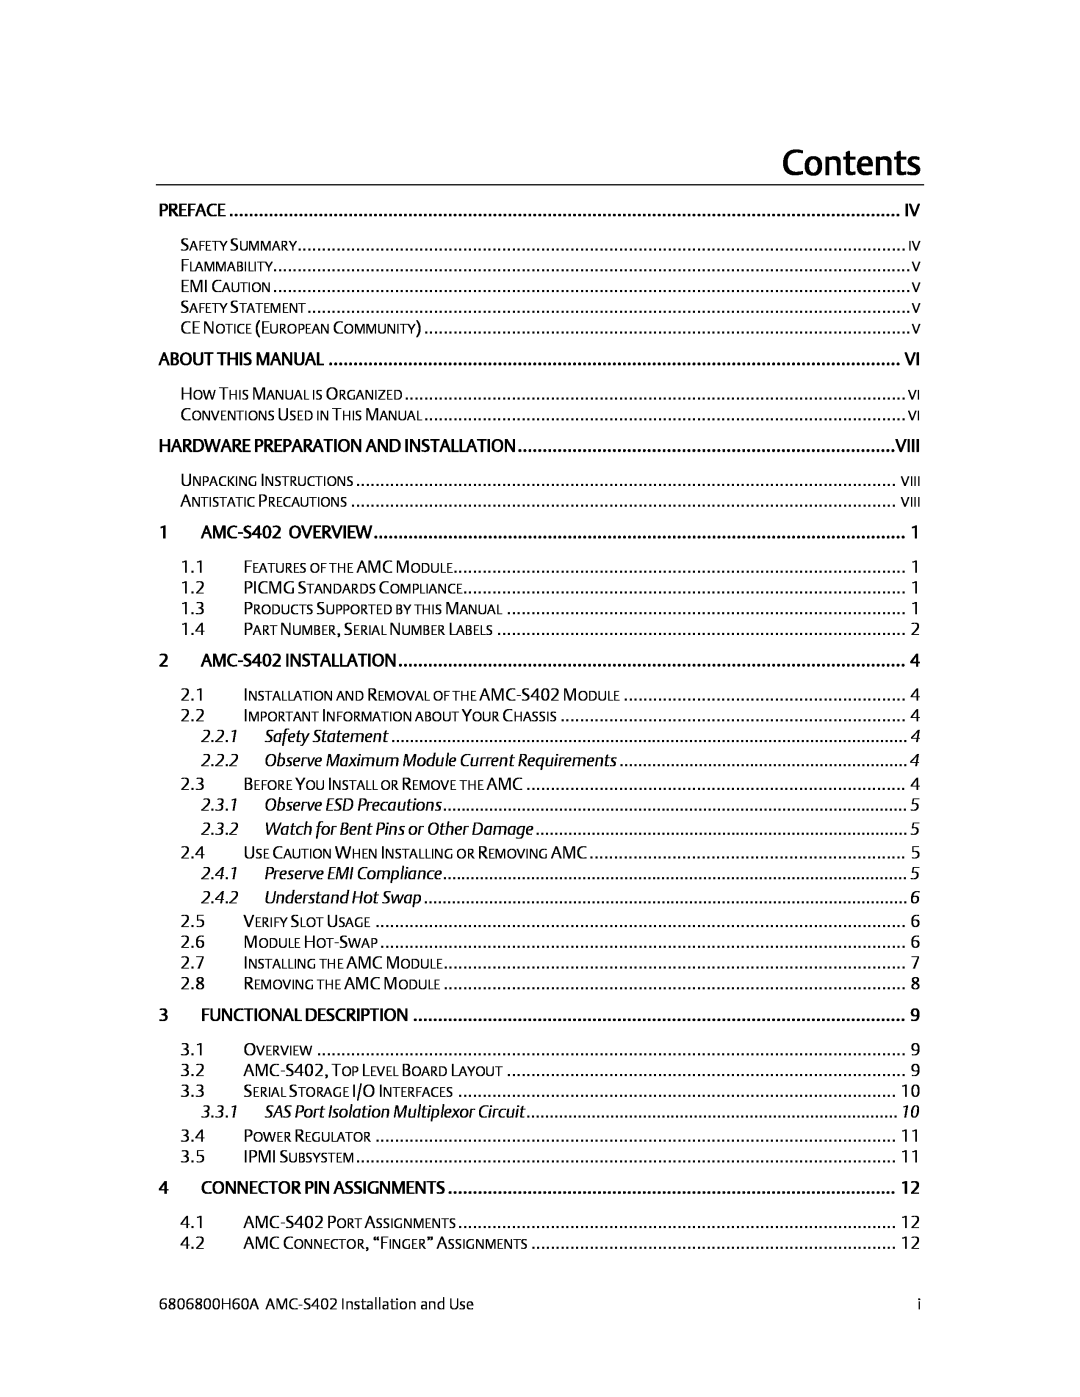 Emerson AMC-S402 manual Contents, 2.2.1, 2.3.1, 2.4.1, 2.4.2 